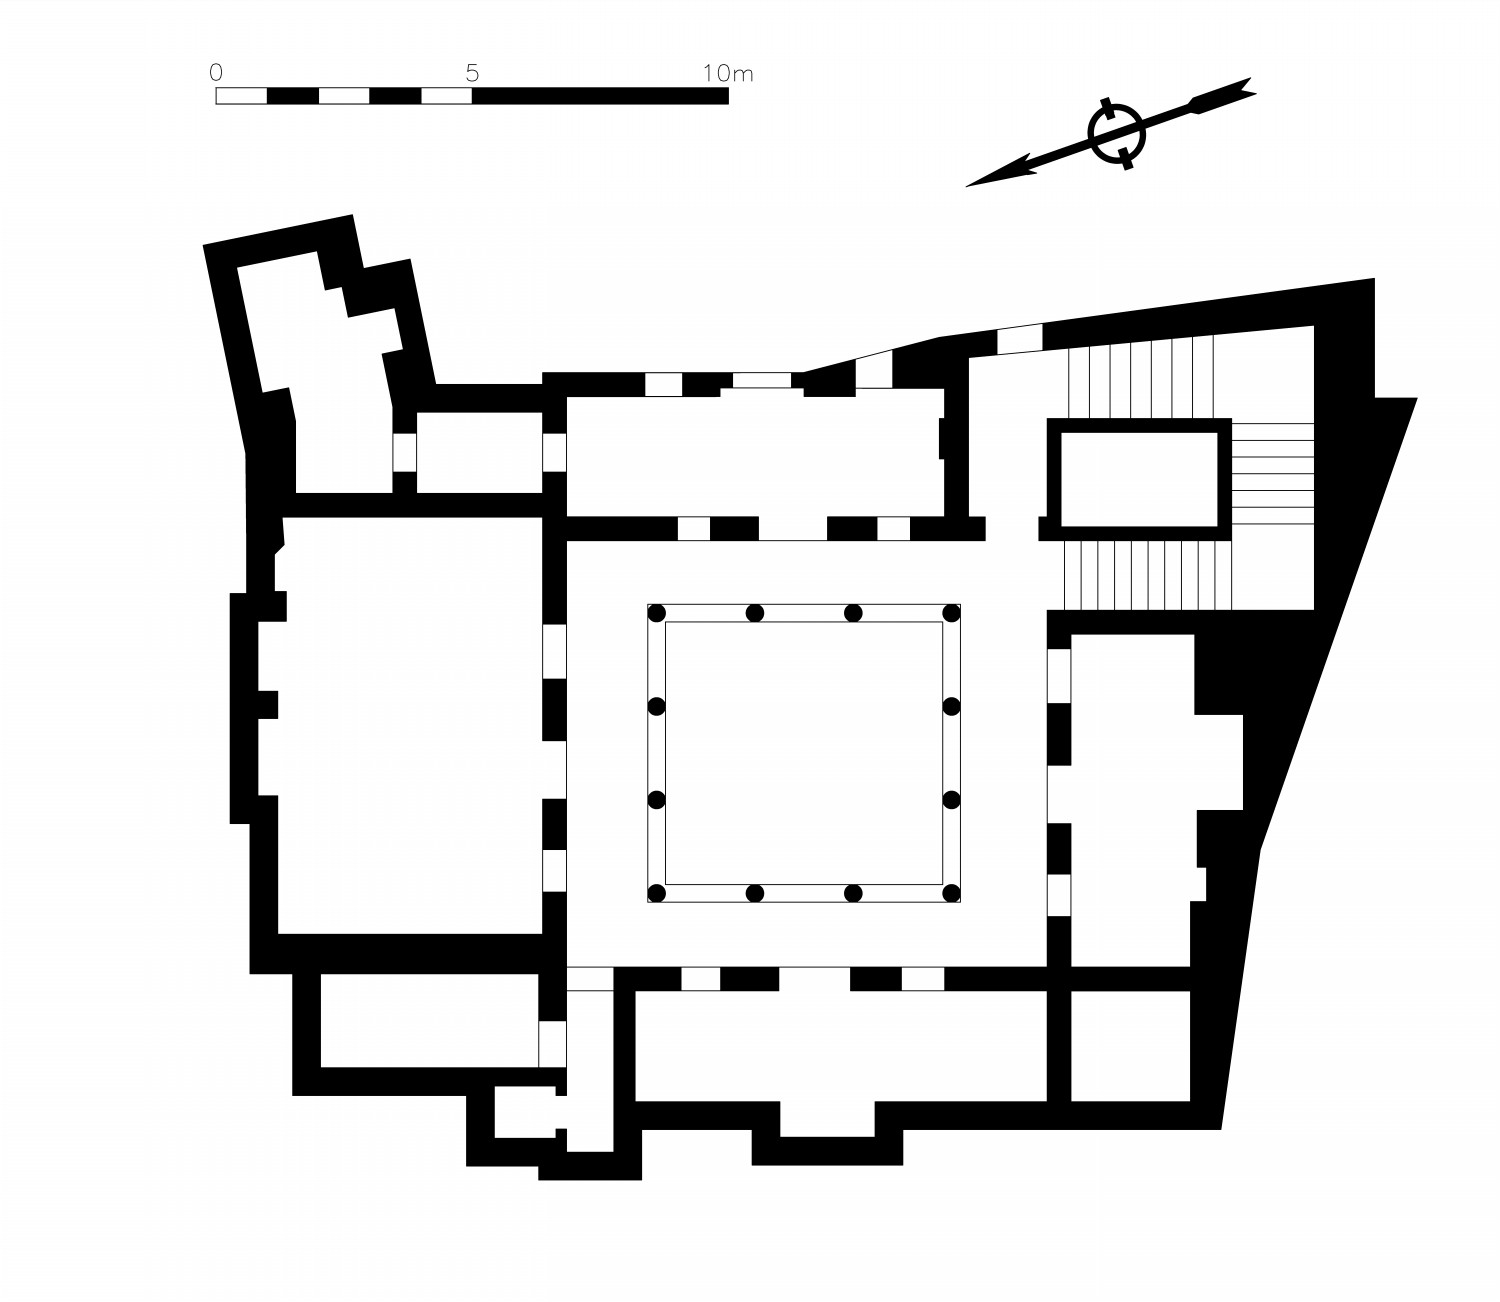 Plan of the second floor, Based on Golvin (1988)